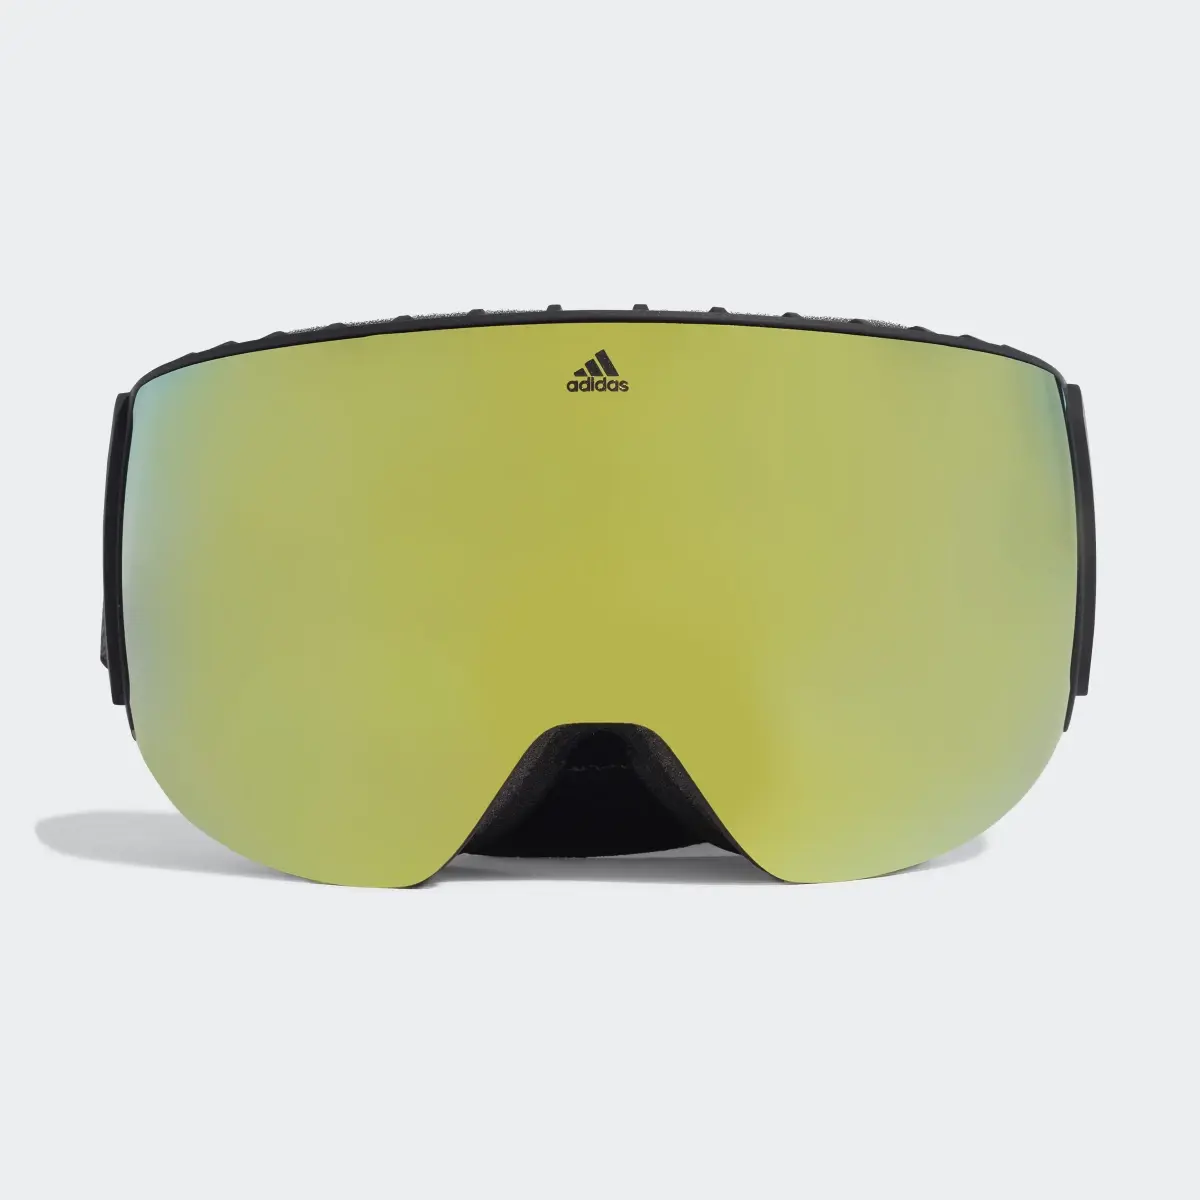 Adidas Snow Goggles SP0053. 2